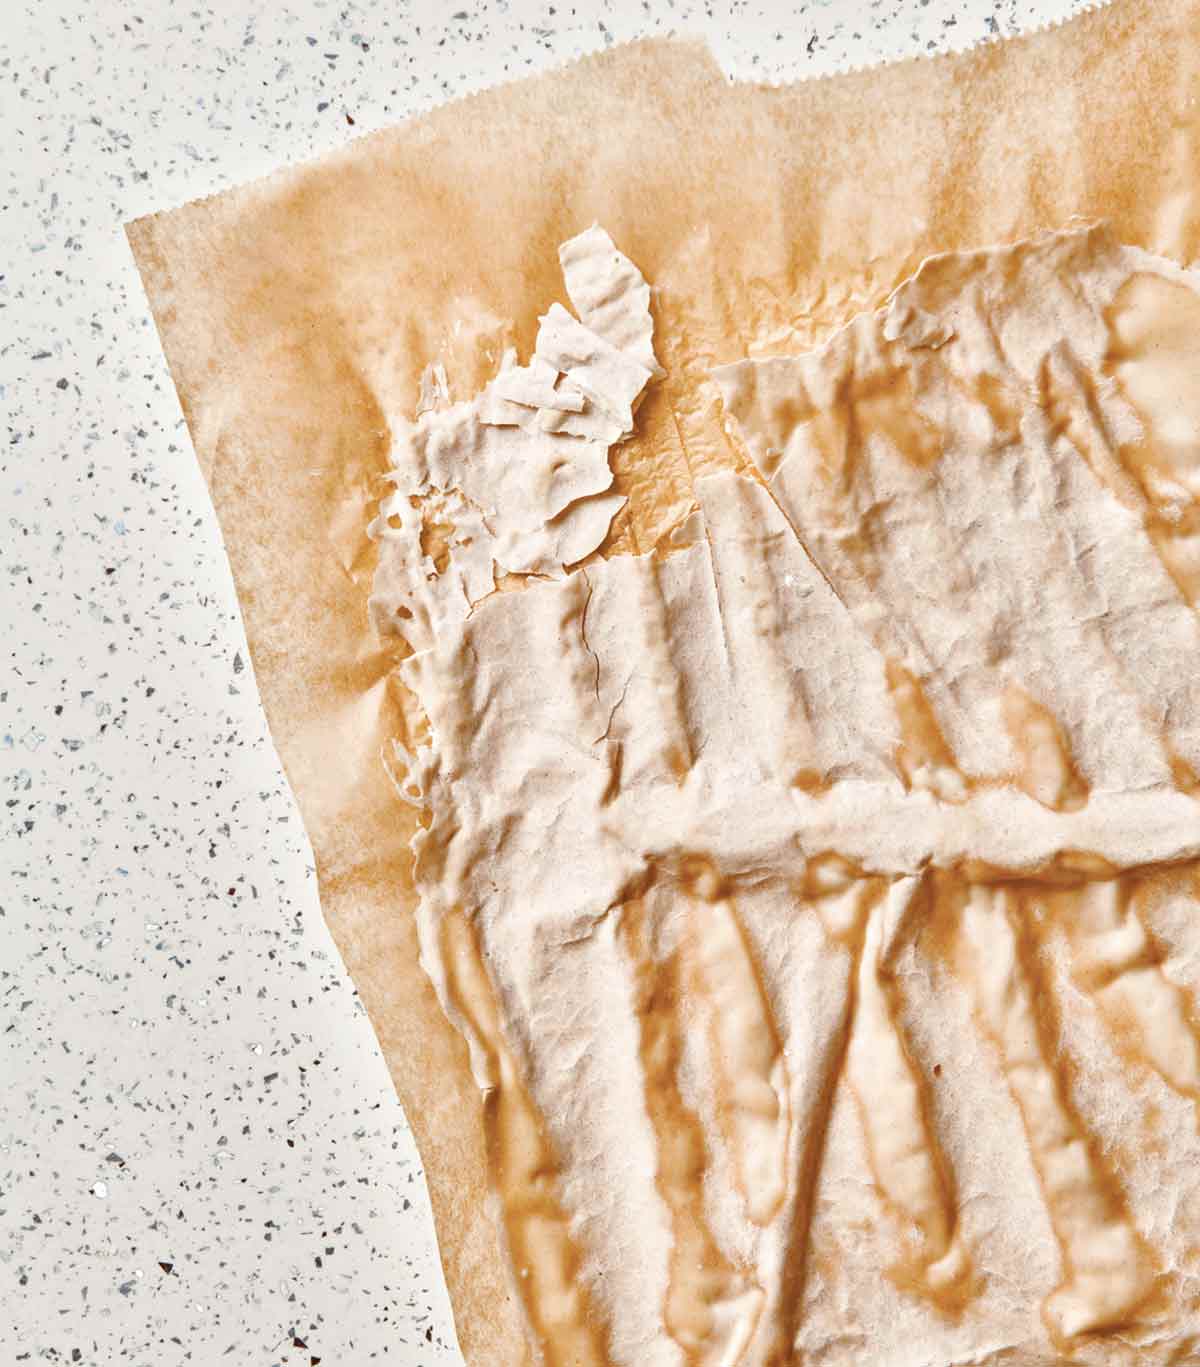 Dried sourdough on a sheet of parchment